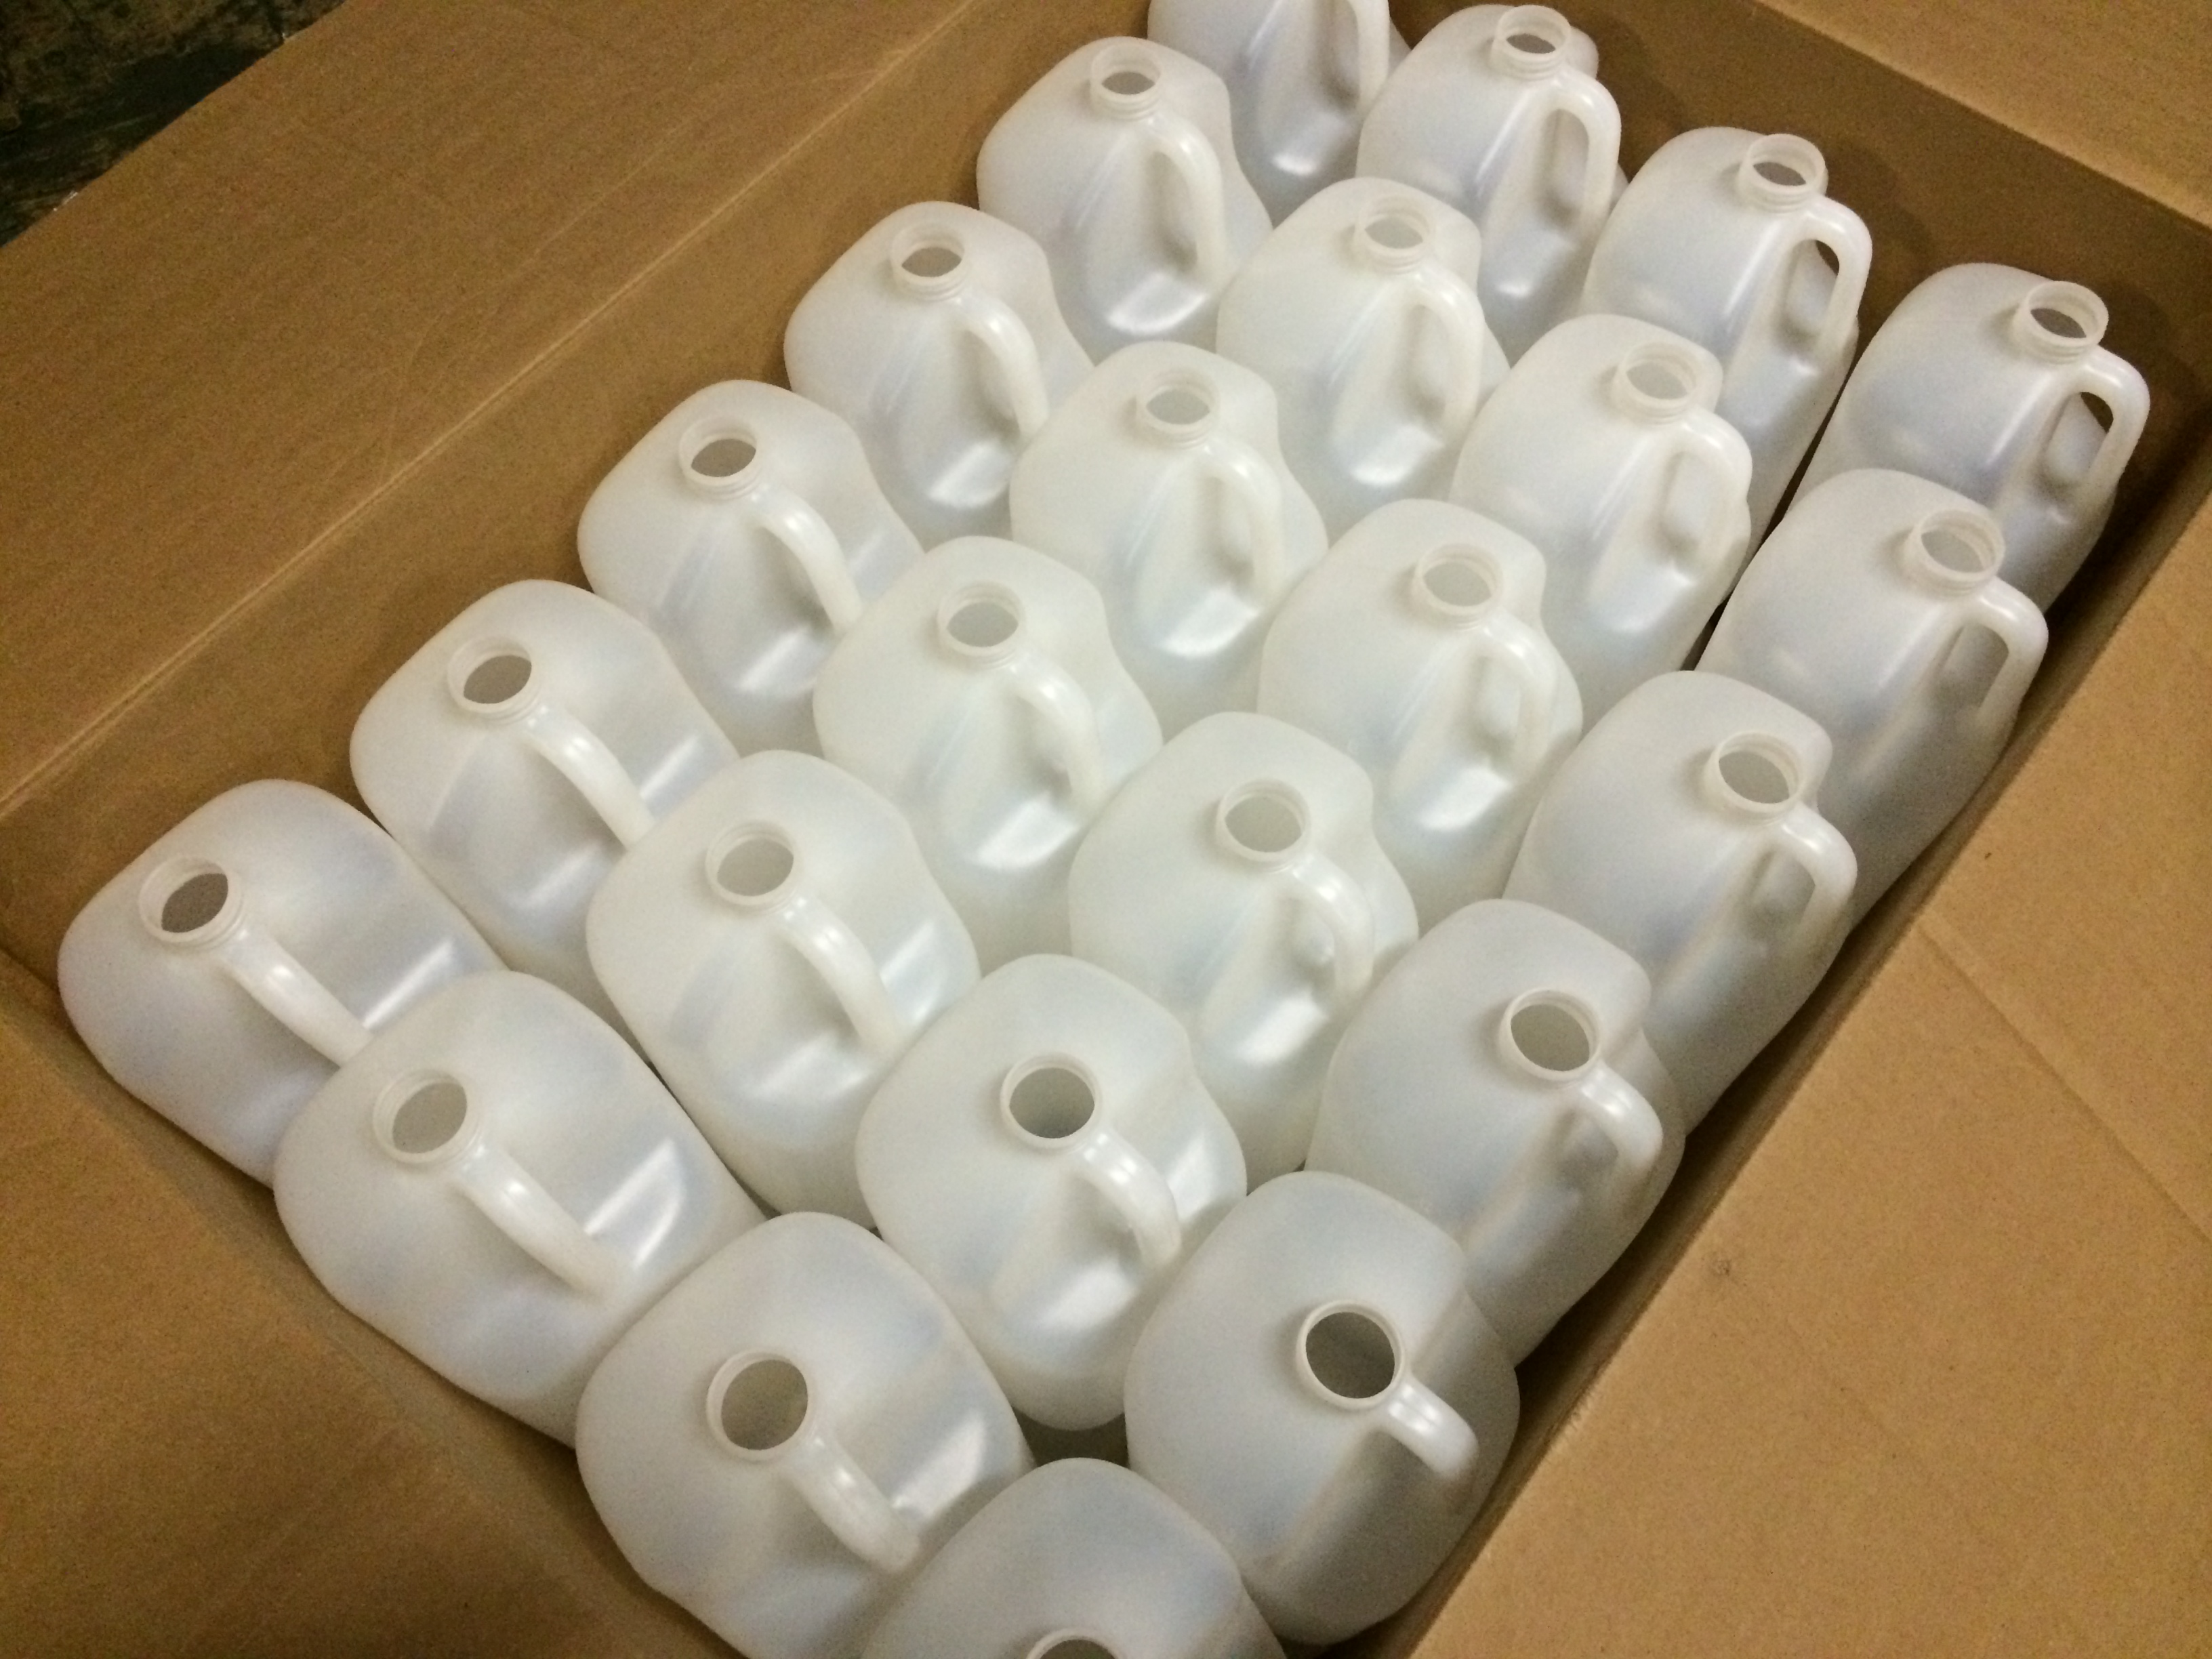 https://yankeecontainers.com/c/wp-content/uploads/2014/03/square-plastic-jugs-bulk-pack.jpg